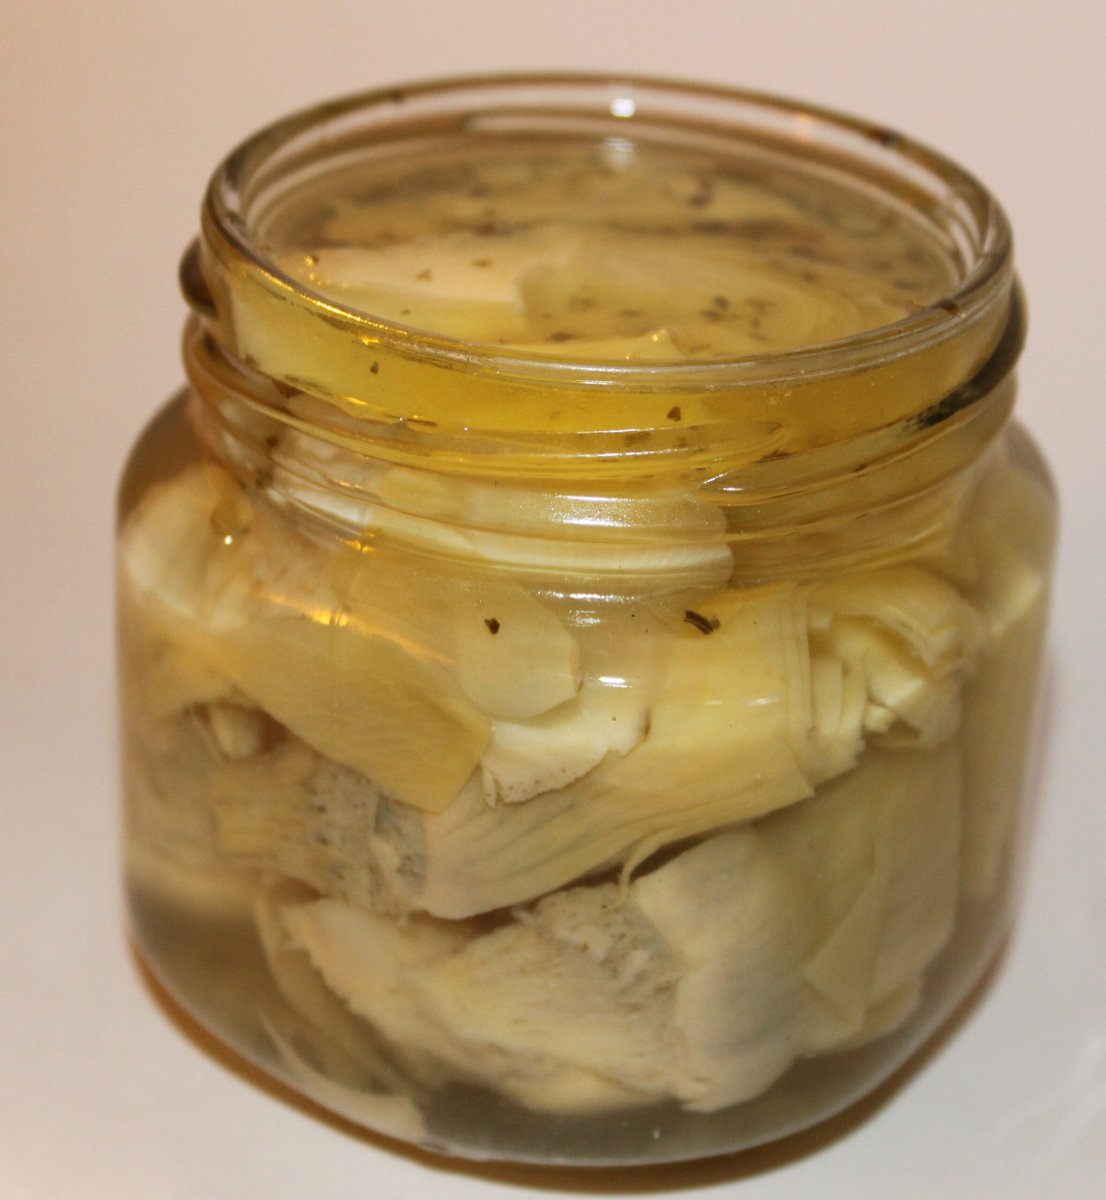 File:Canned marinated artichoke hearts.JPG from wikimedia}